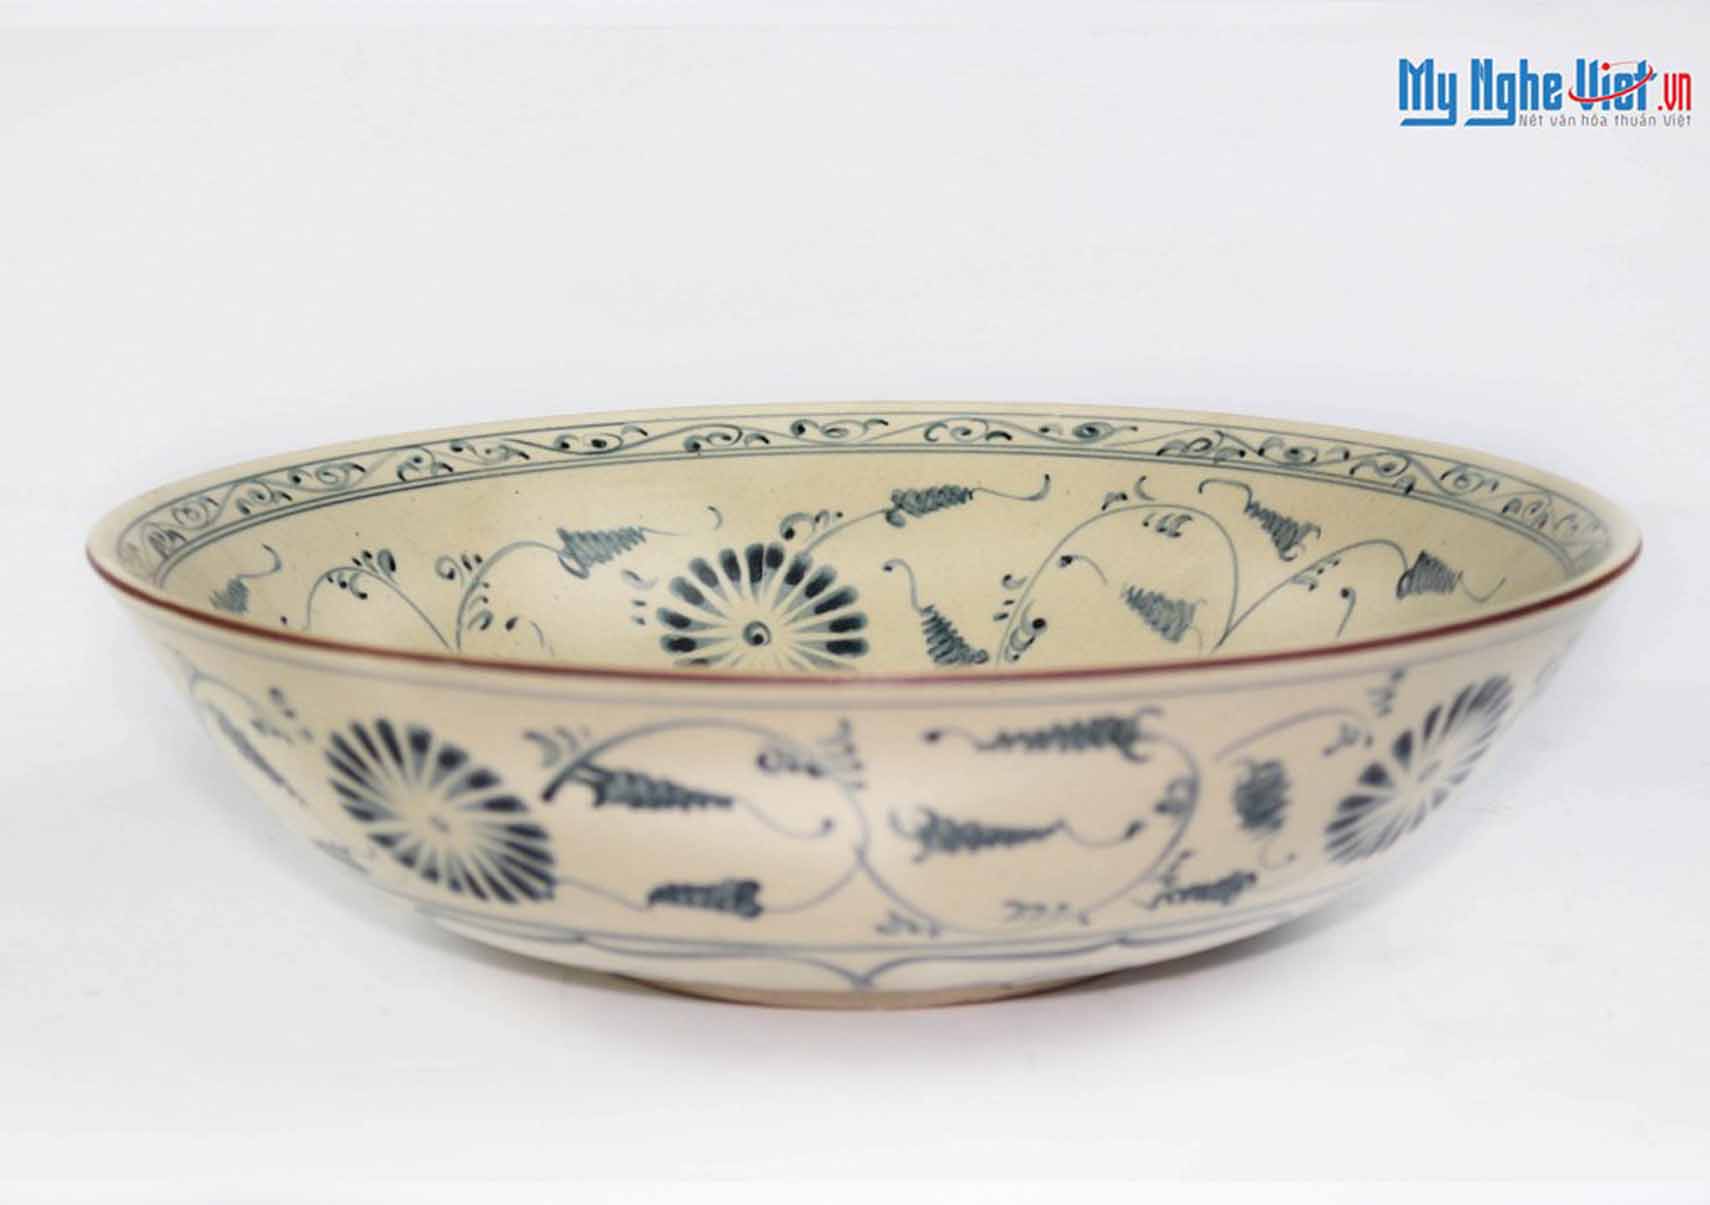 Bat Trang Pottery Bowl with Green Chrysanthemum Pattern MNV-BOA10-1